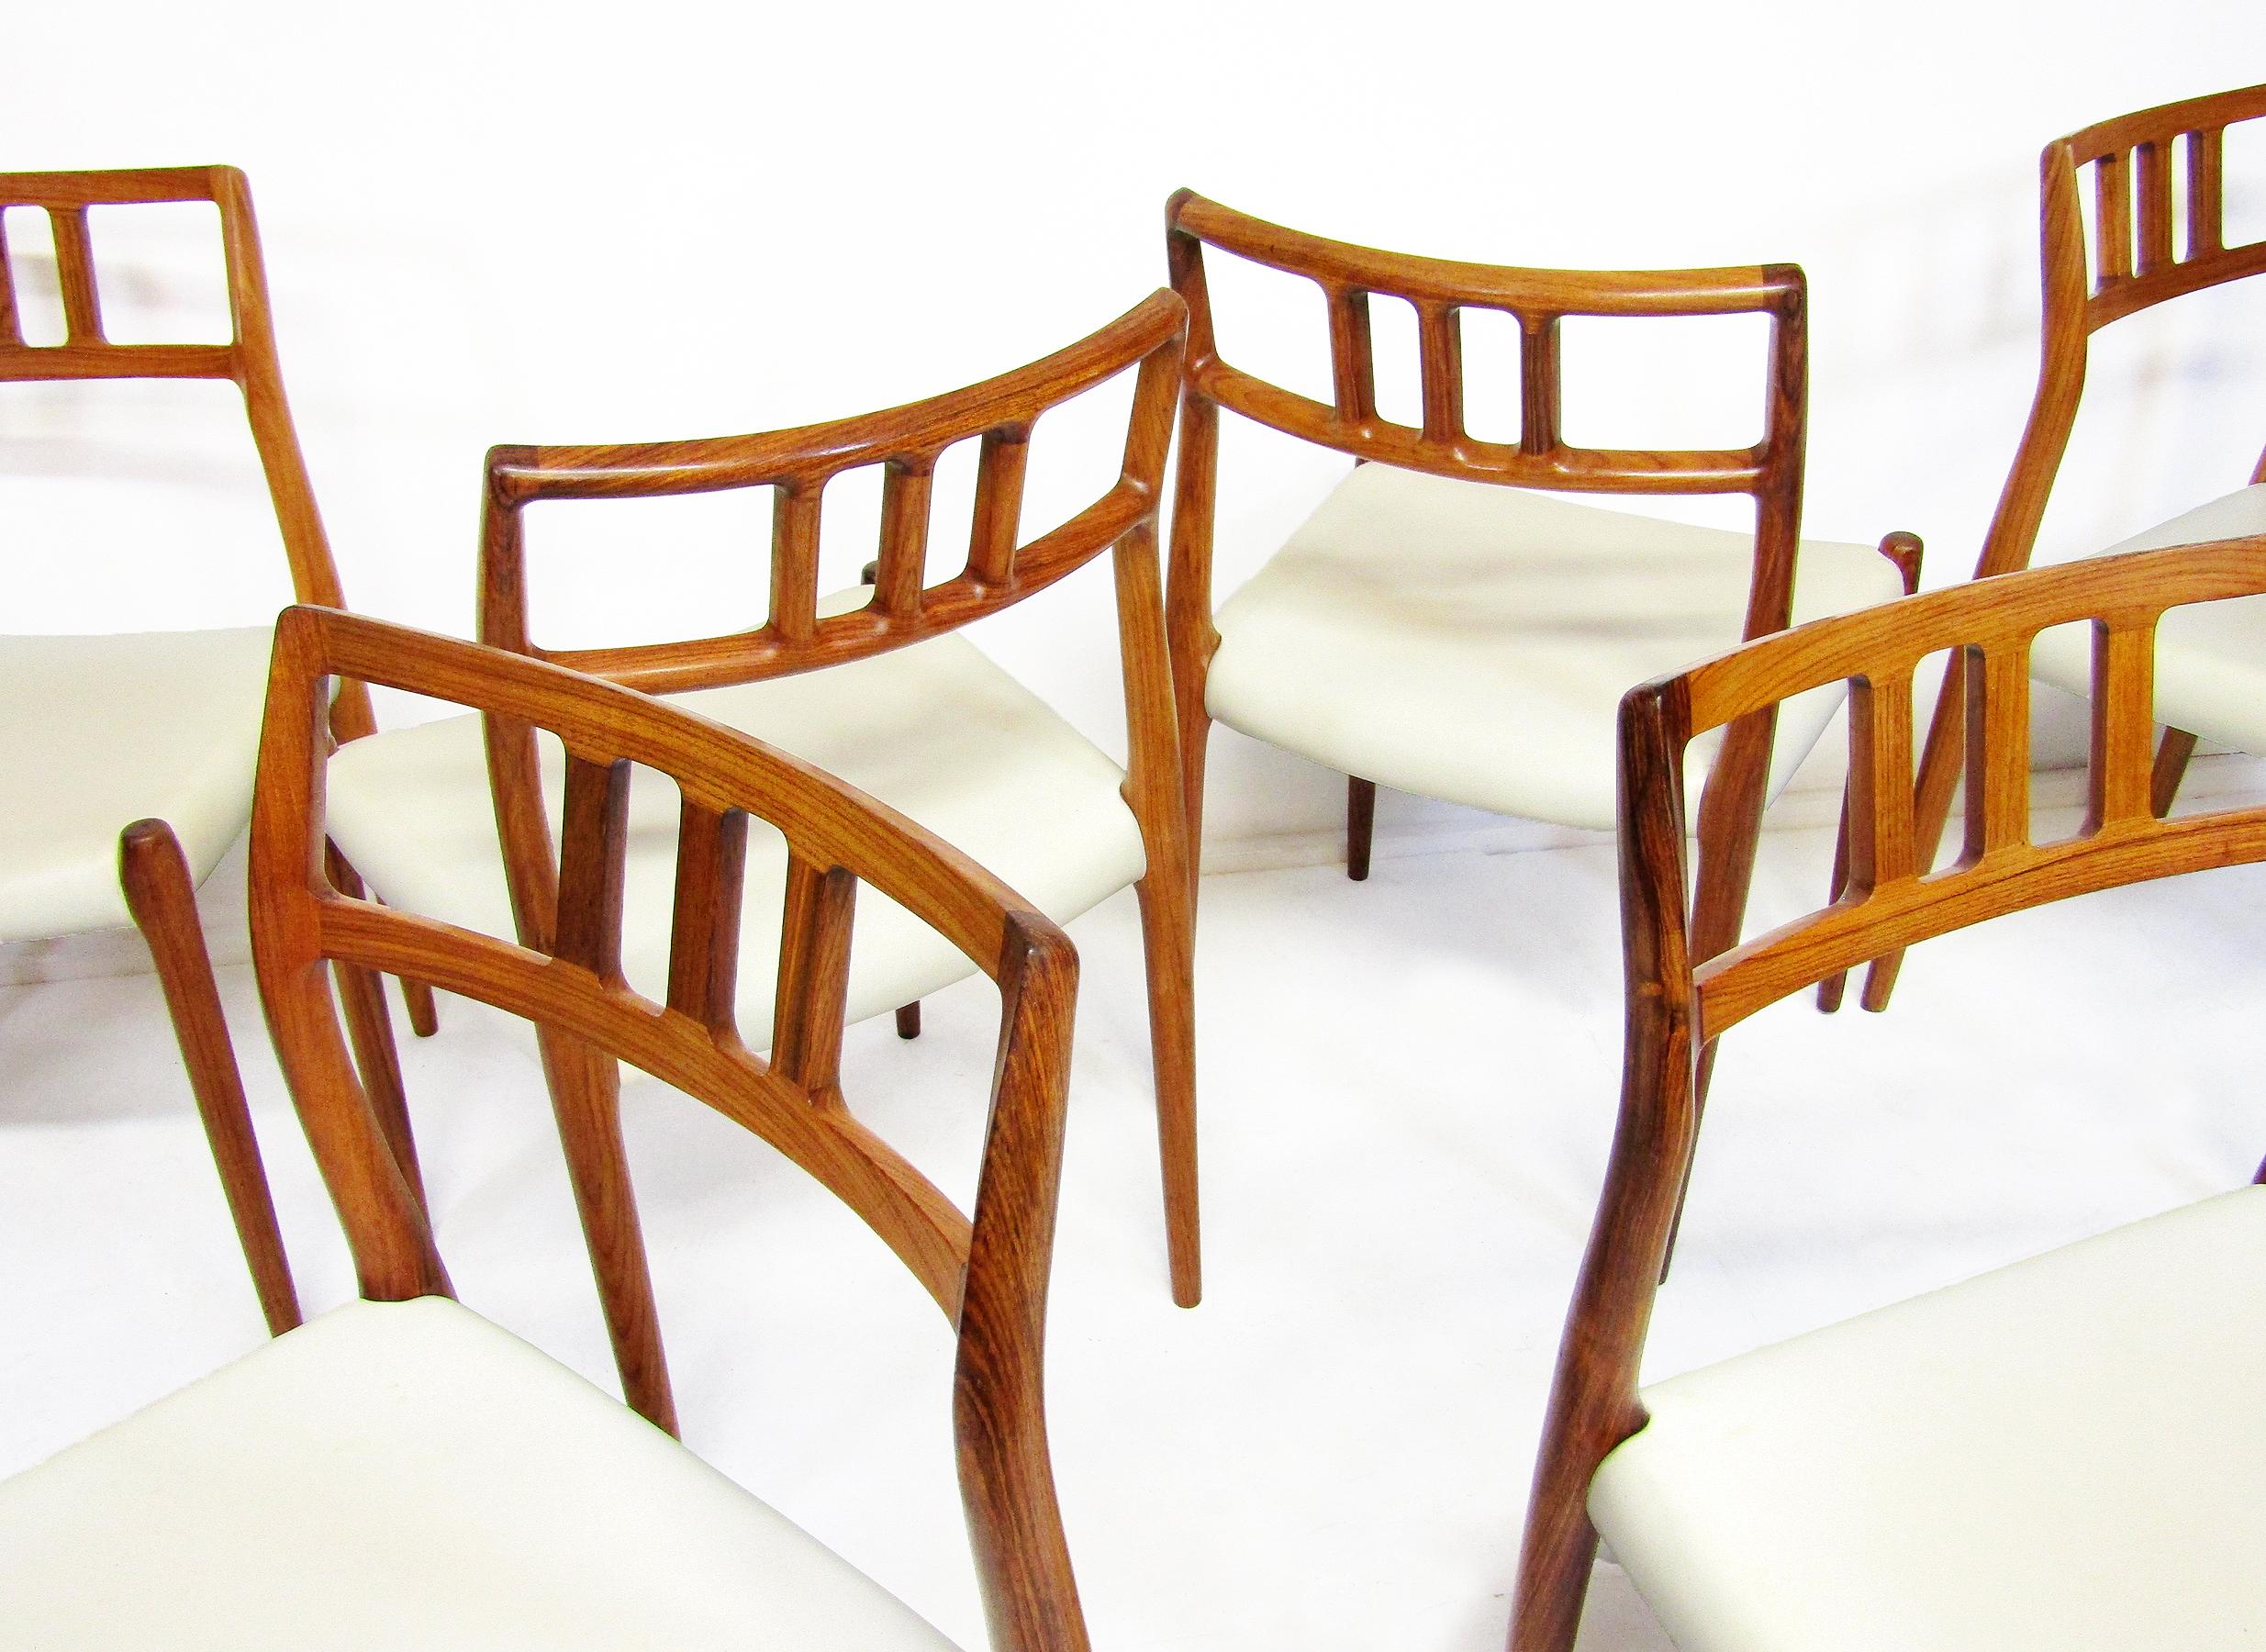 Sechs dänische Stühle „Modell 79“ aus Palisanderholz von Niels Moller, um 1960 (Dänisch)